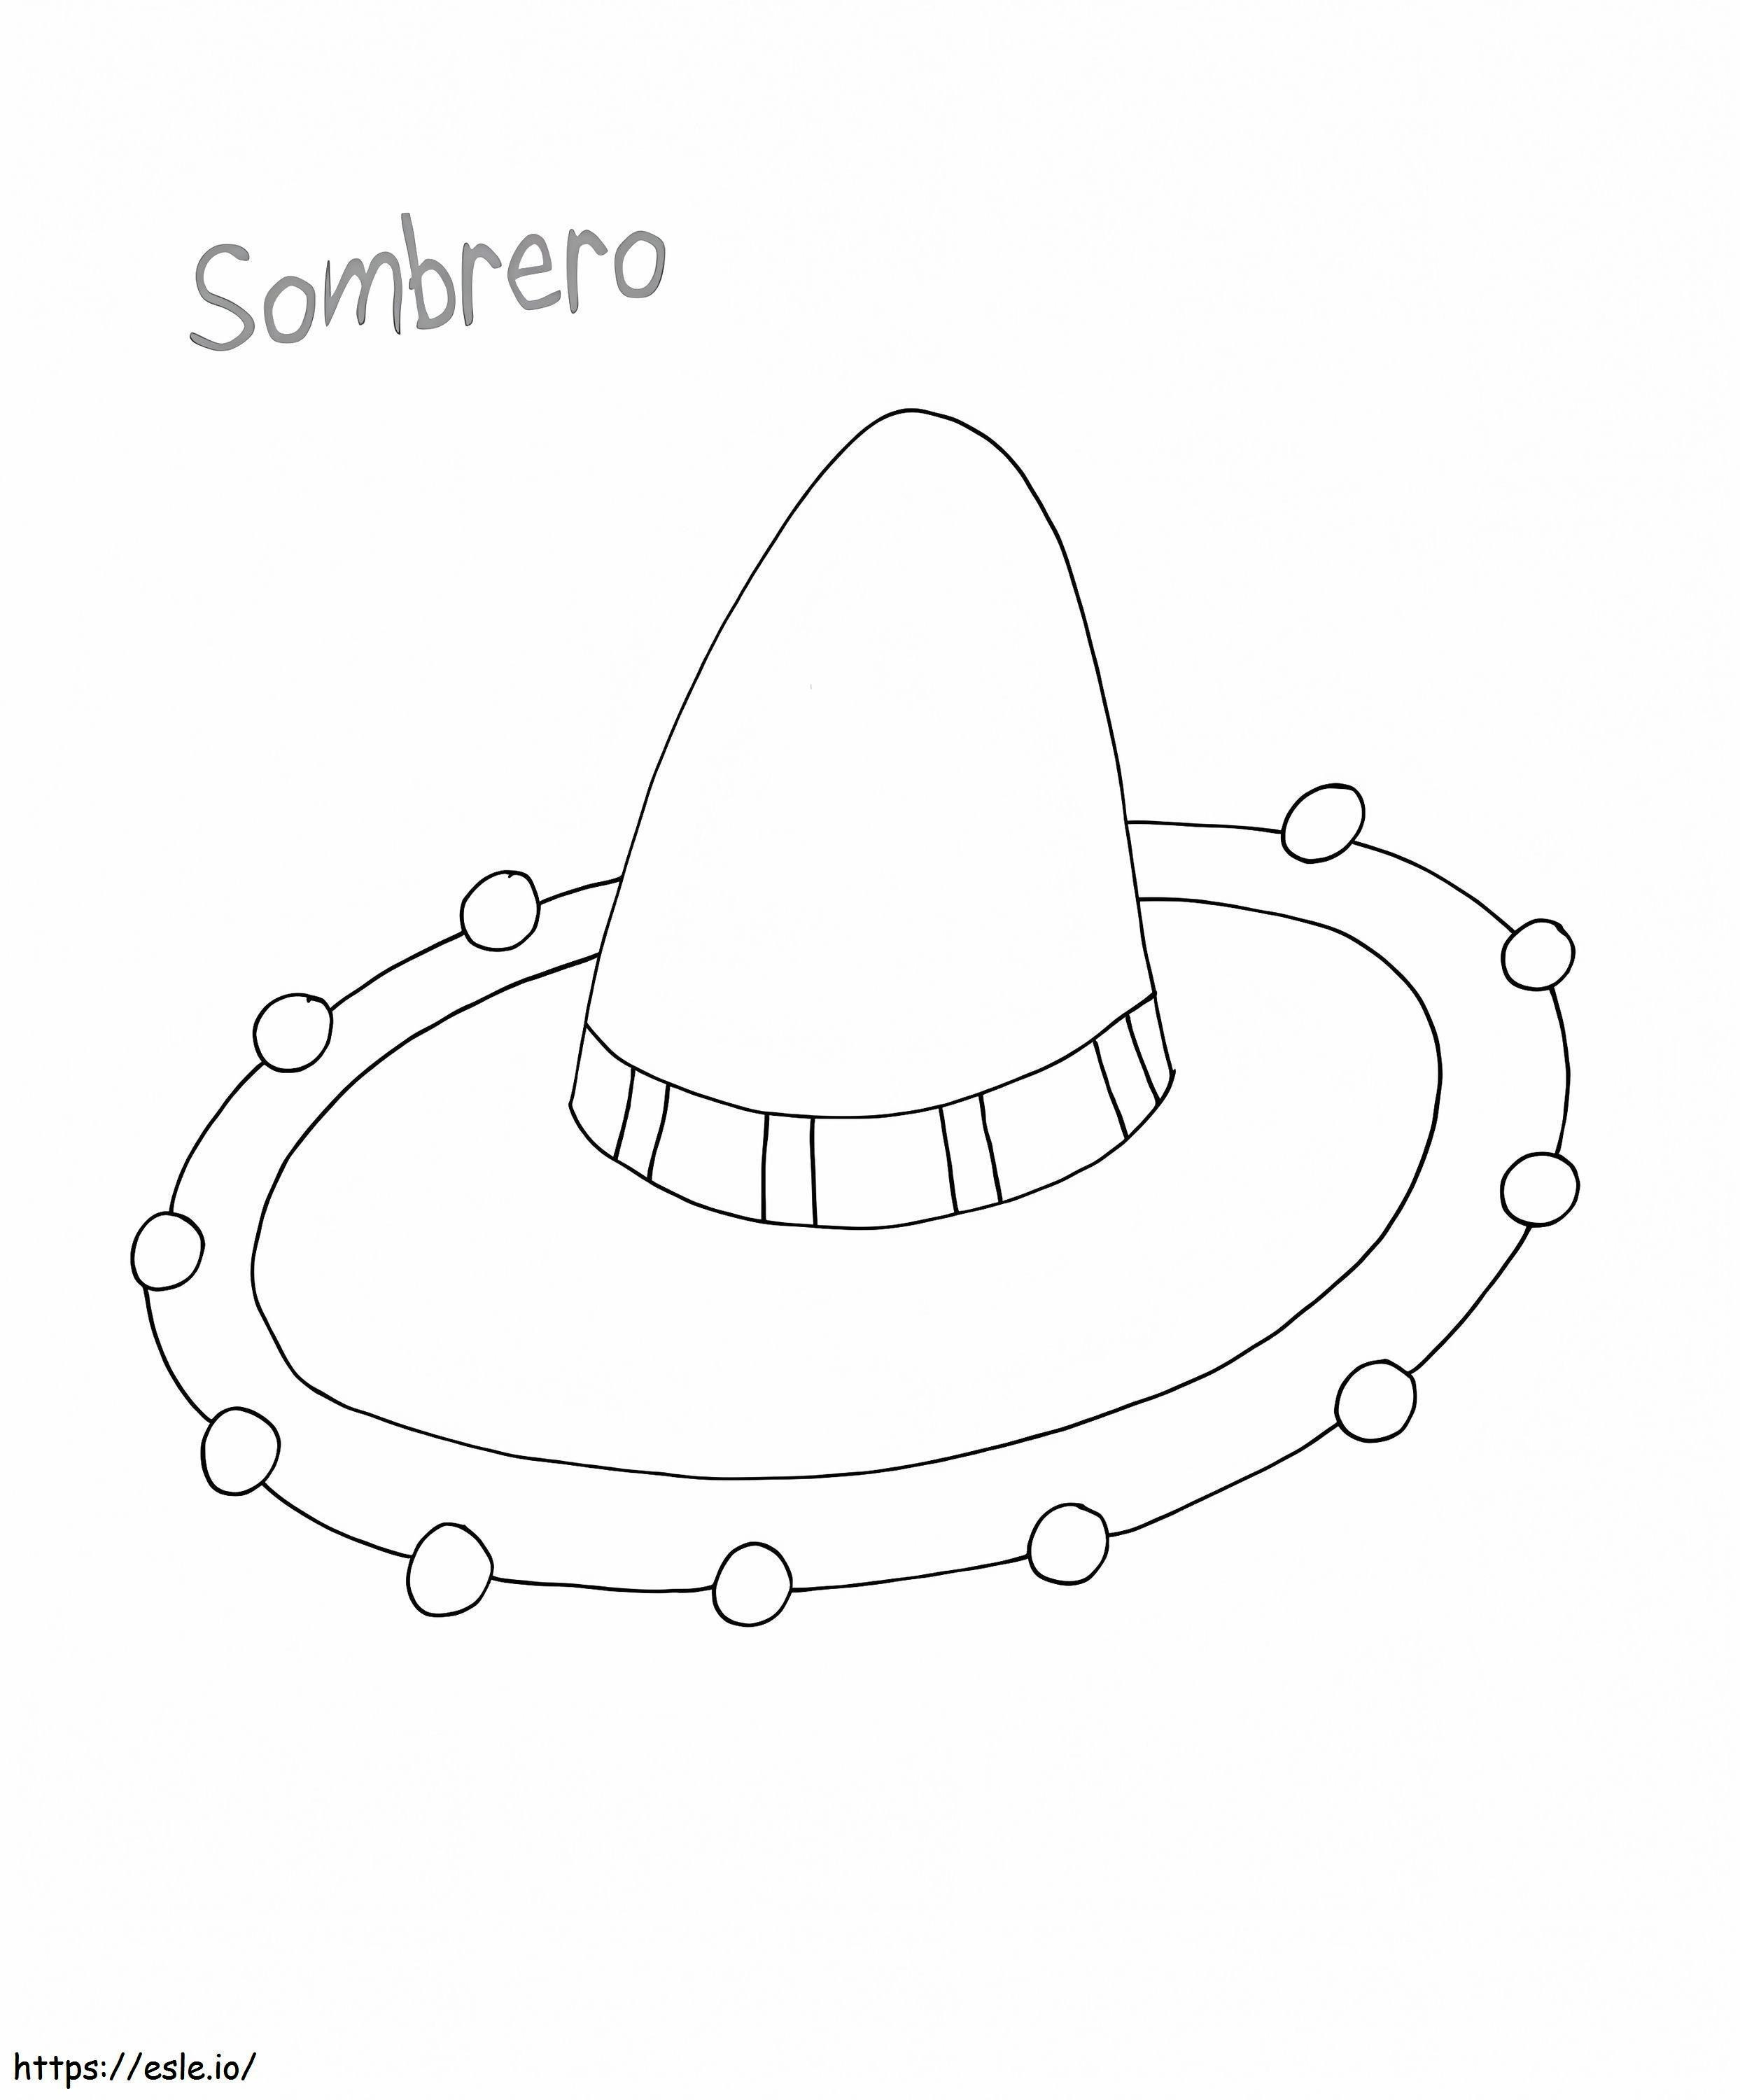 Mexican Sombrero Hat coloring page